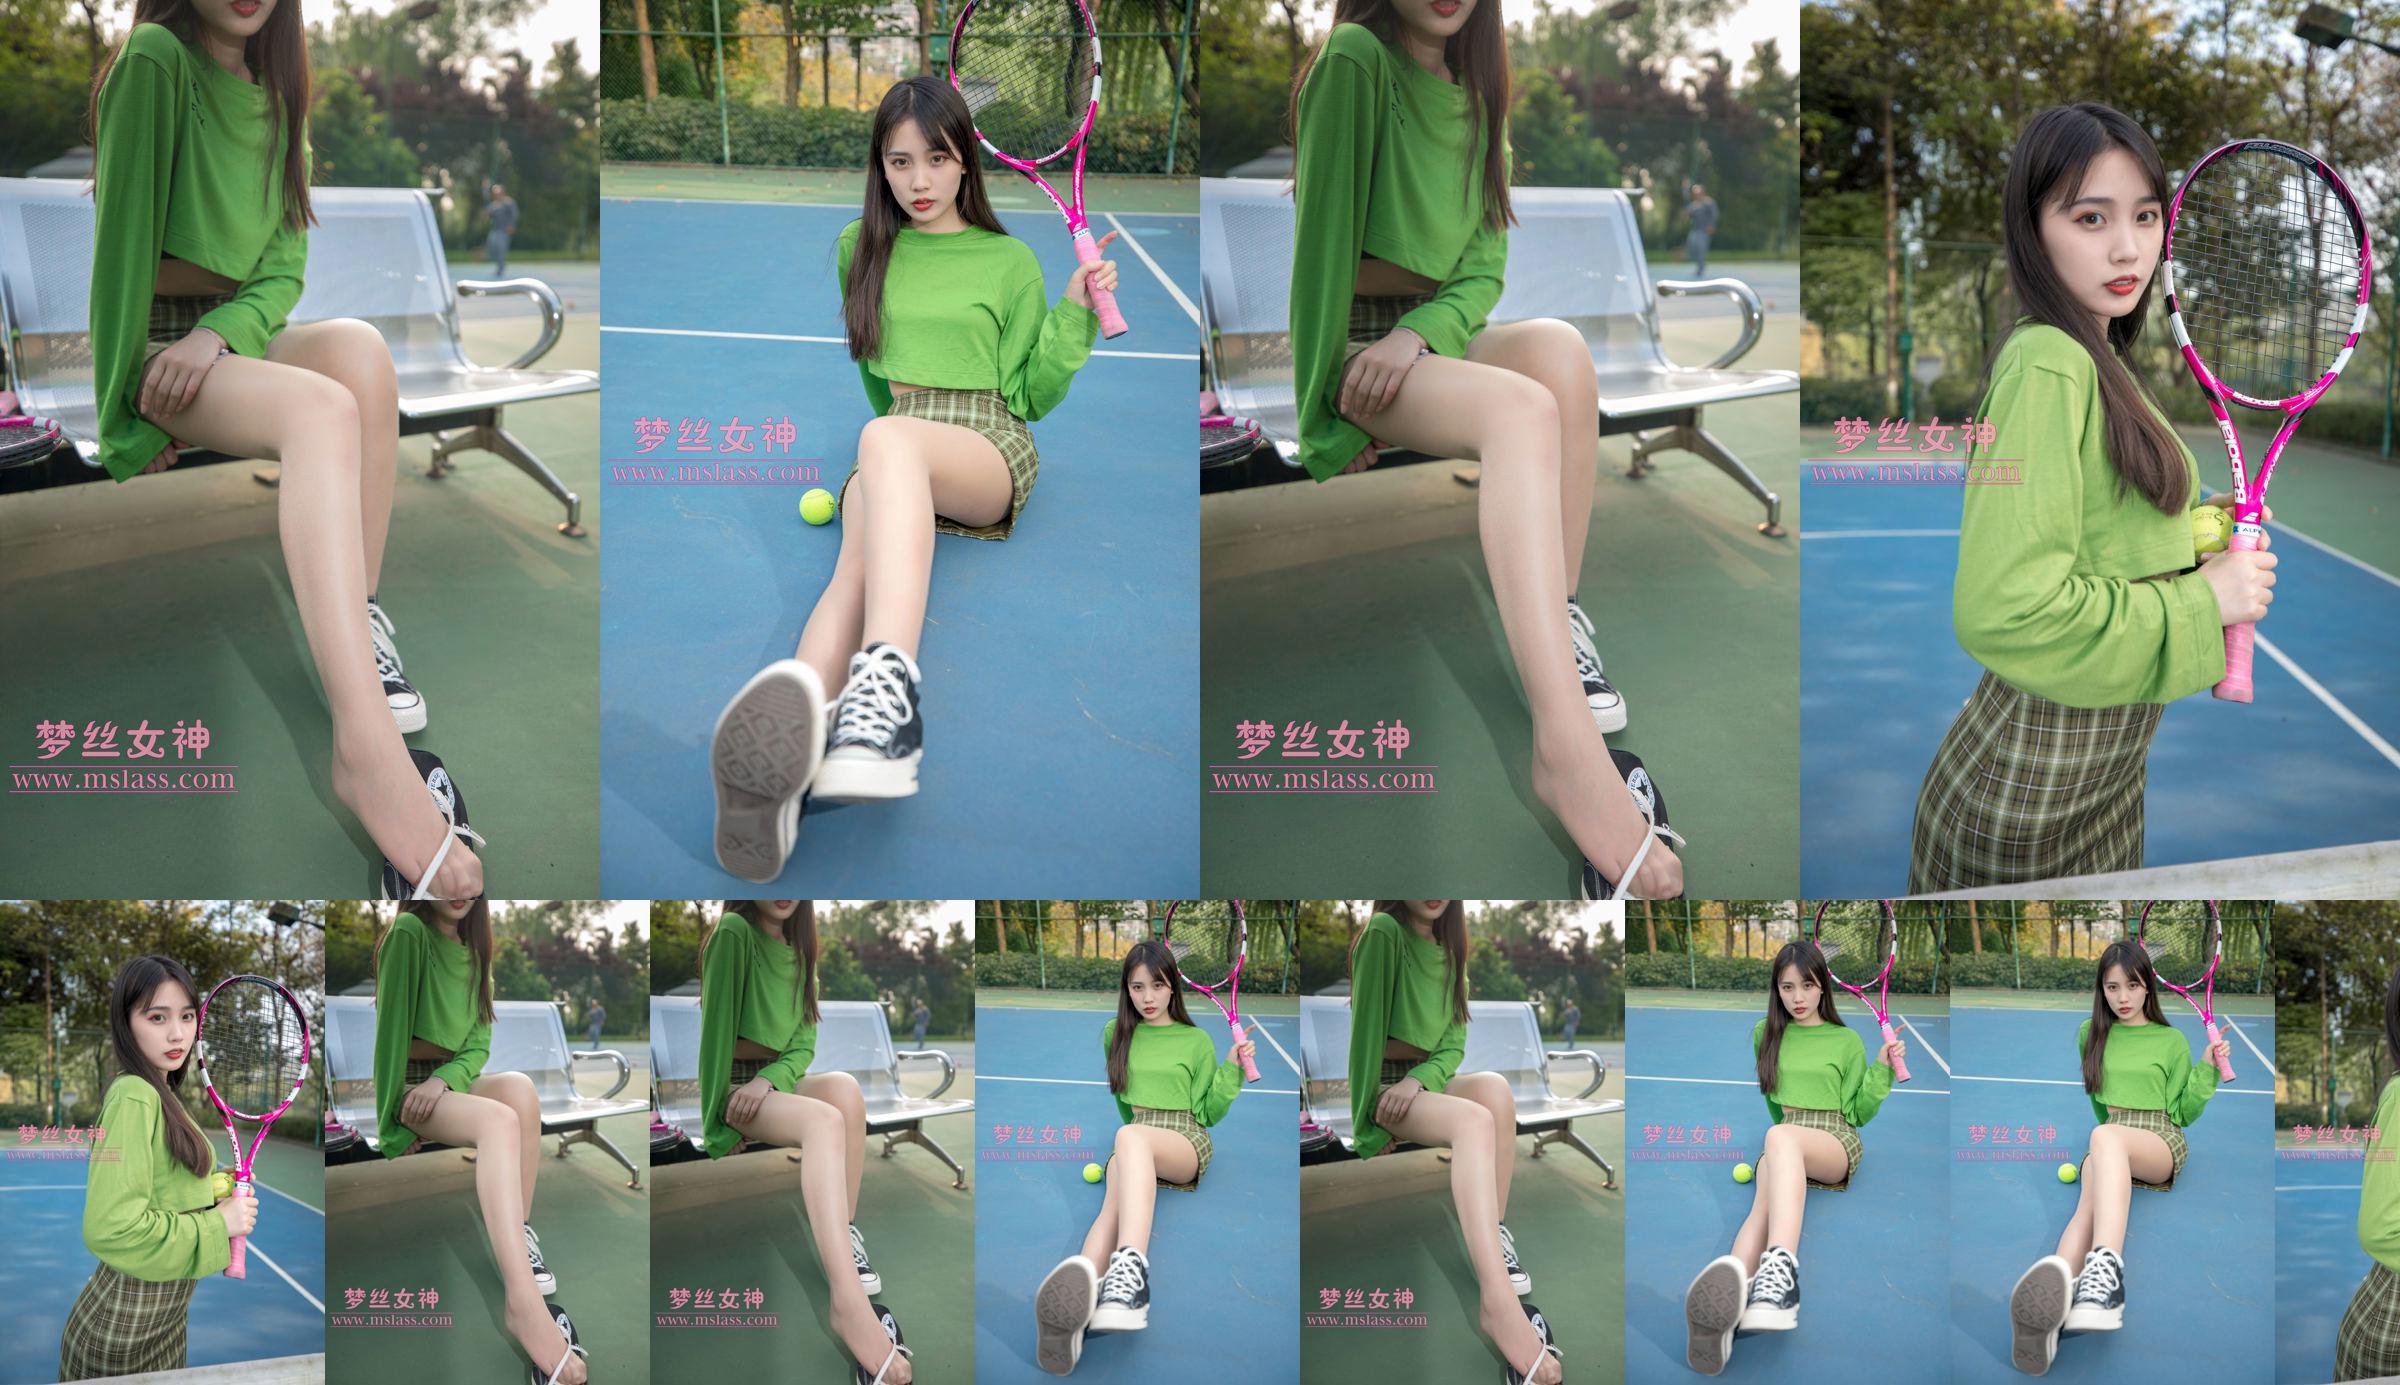 [Déesse des rêves MSLASS] Xiang Xuan Tennis Girl No.47c19d Page 2